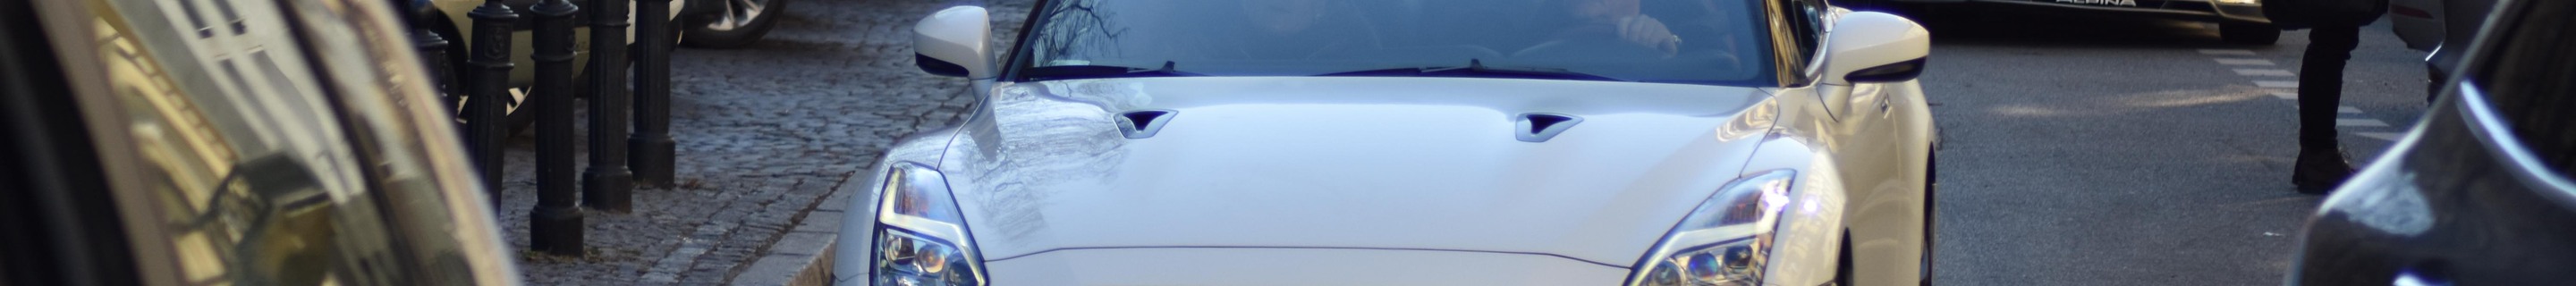 Nissan GT-R 2015